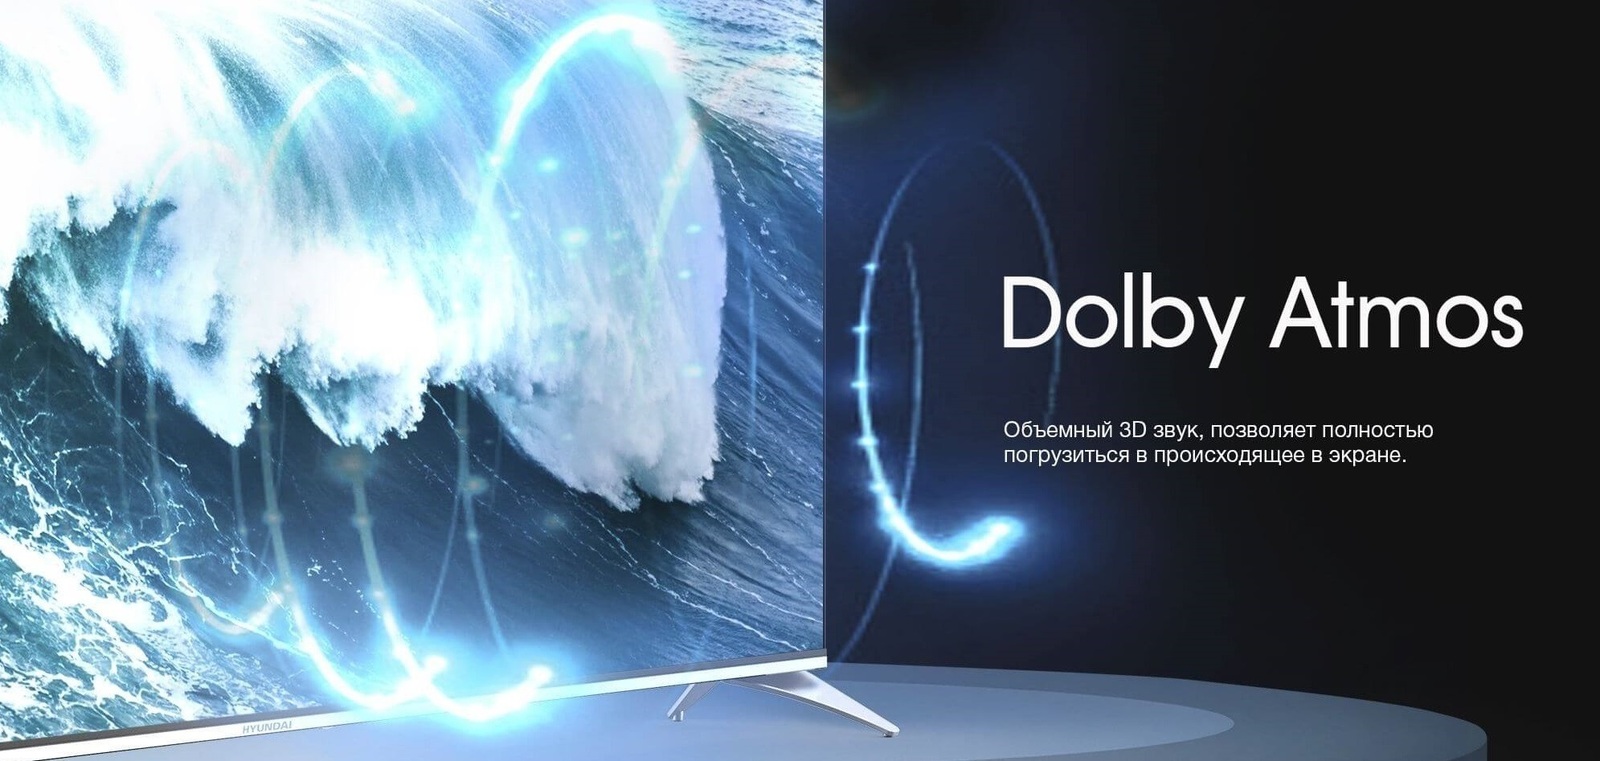 Dolby Atmos подарит объёмный 3D звук.